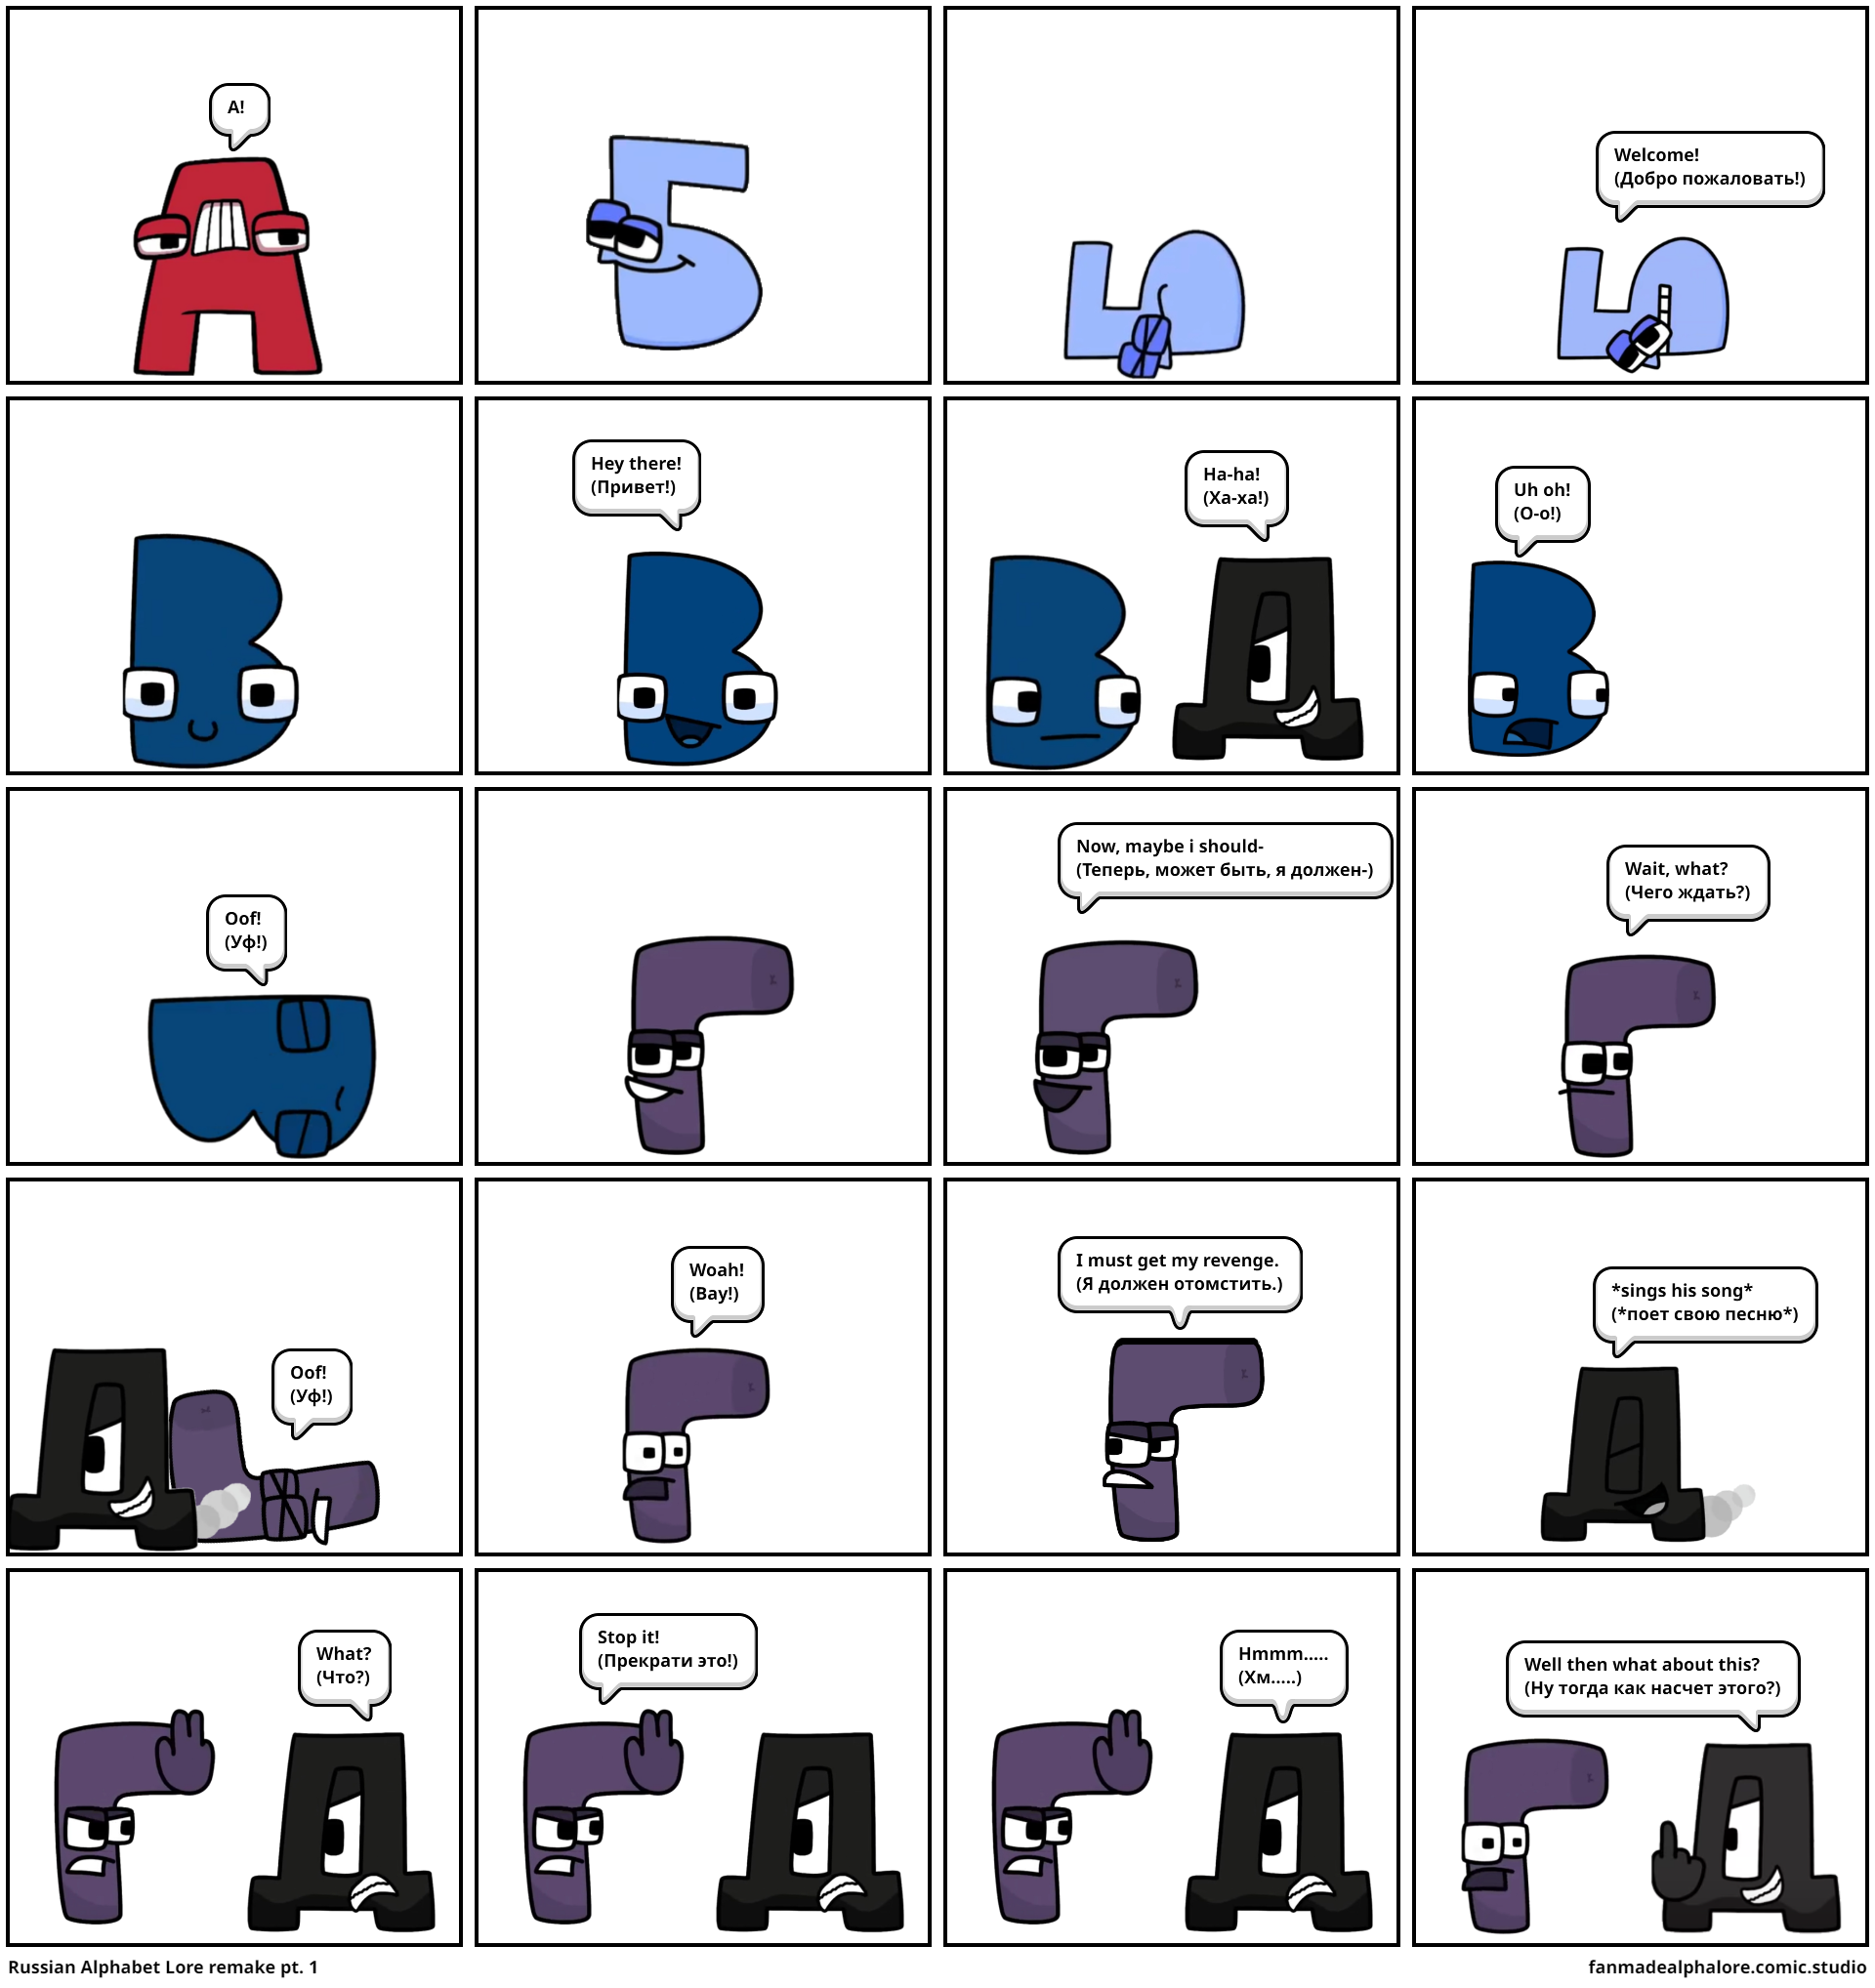 Hm, Today Alphabet Lore Comic Studio looks Different : r/alphabetfriends